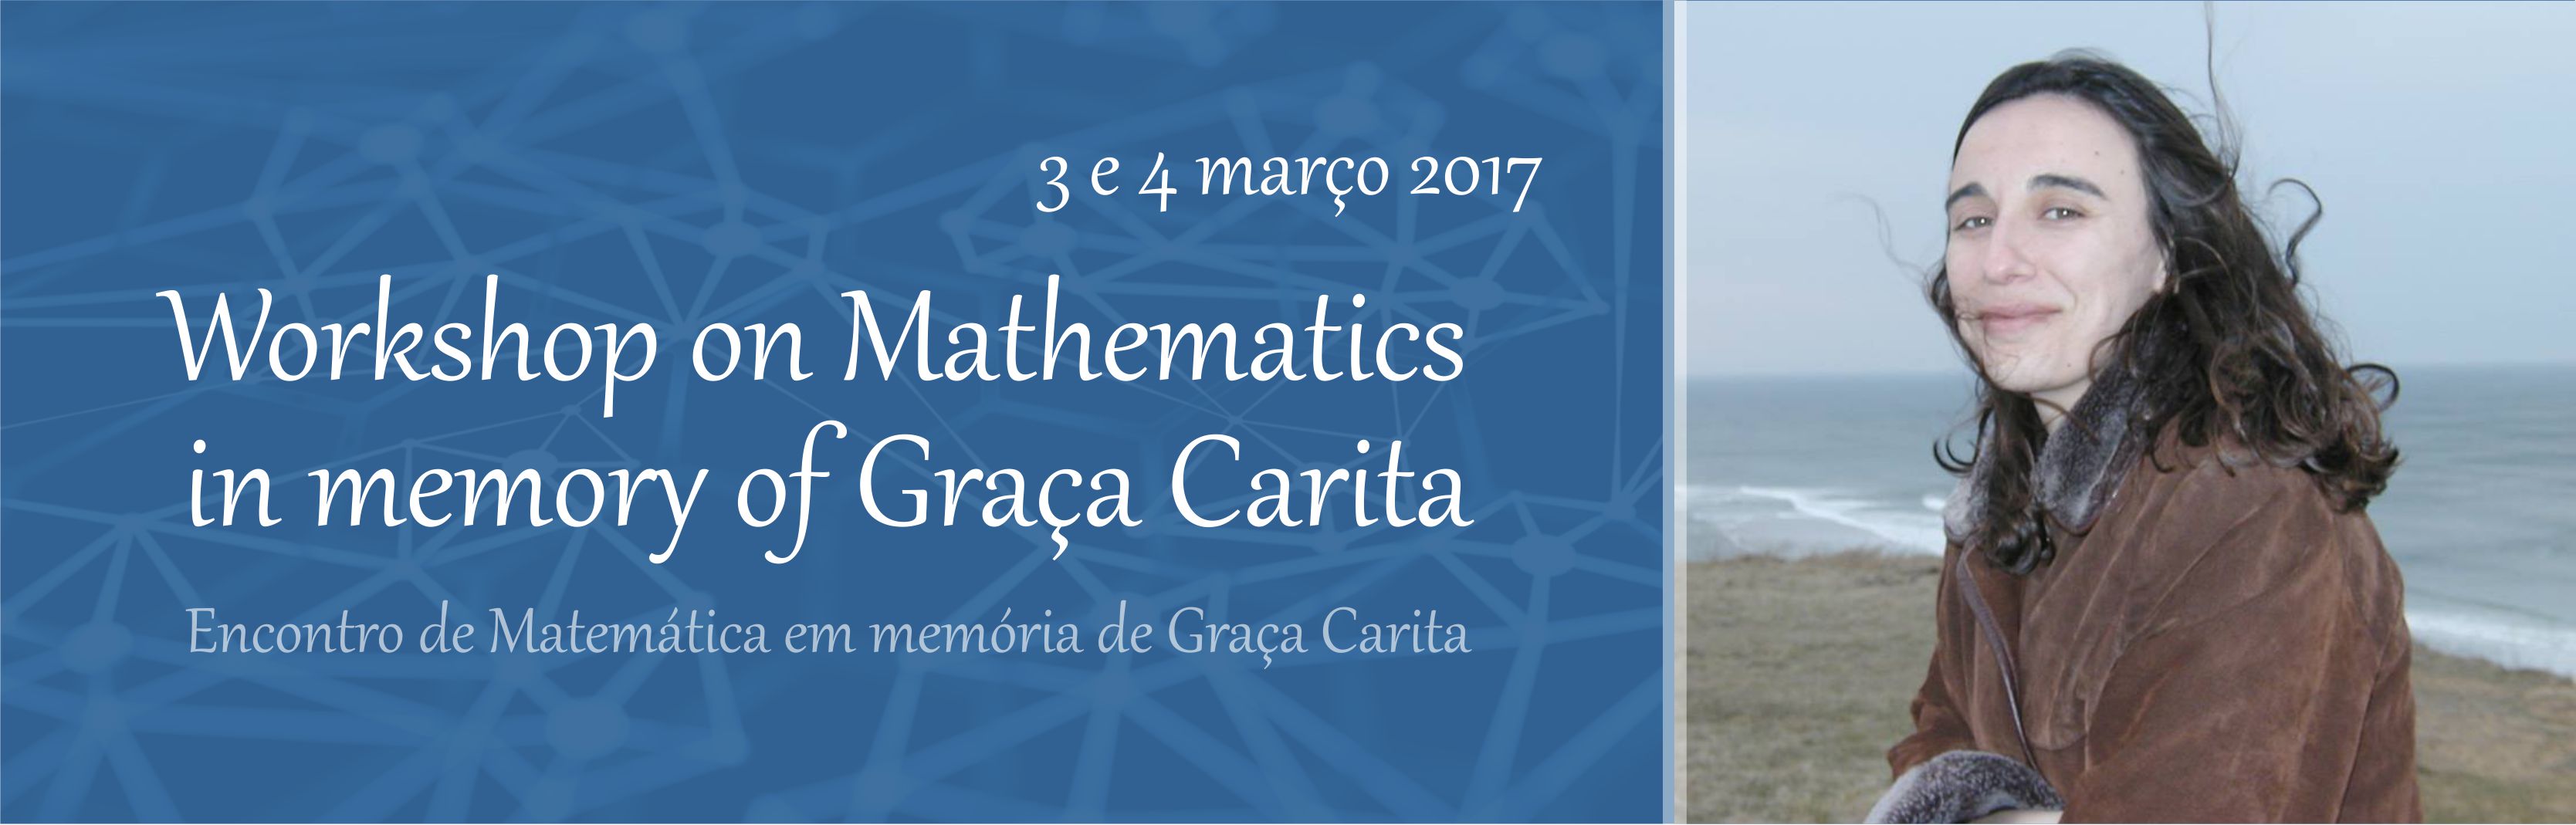 Workshop on Mathematics in memory of Graça Carita